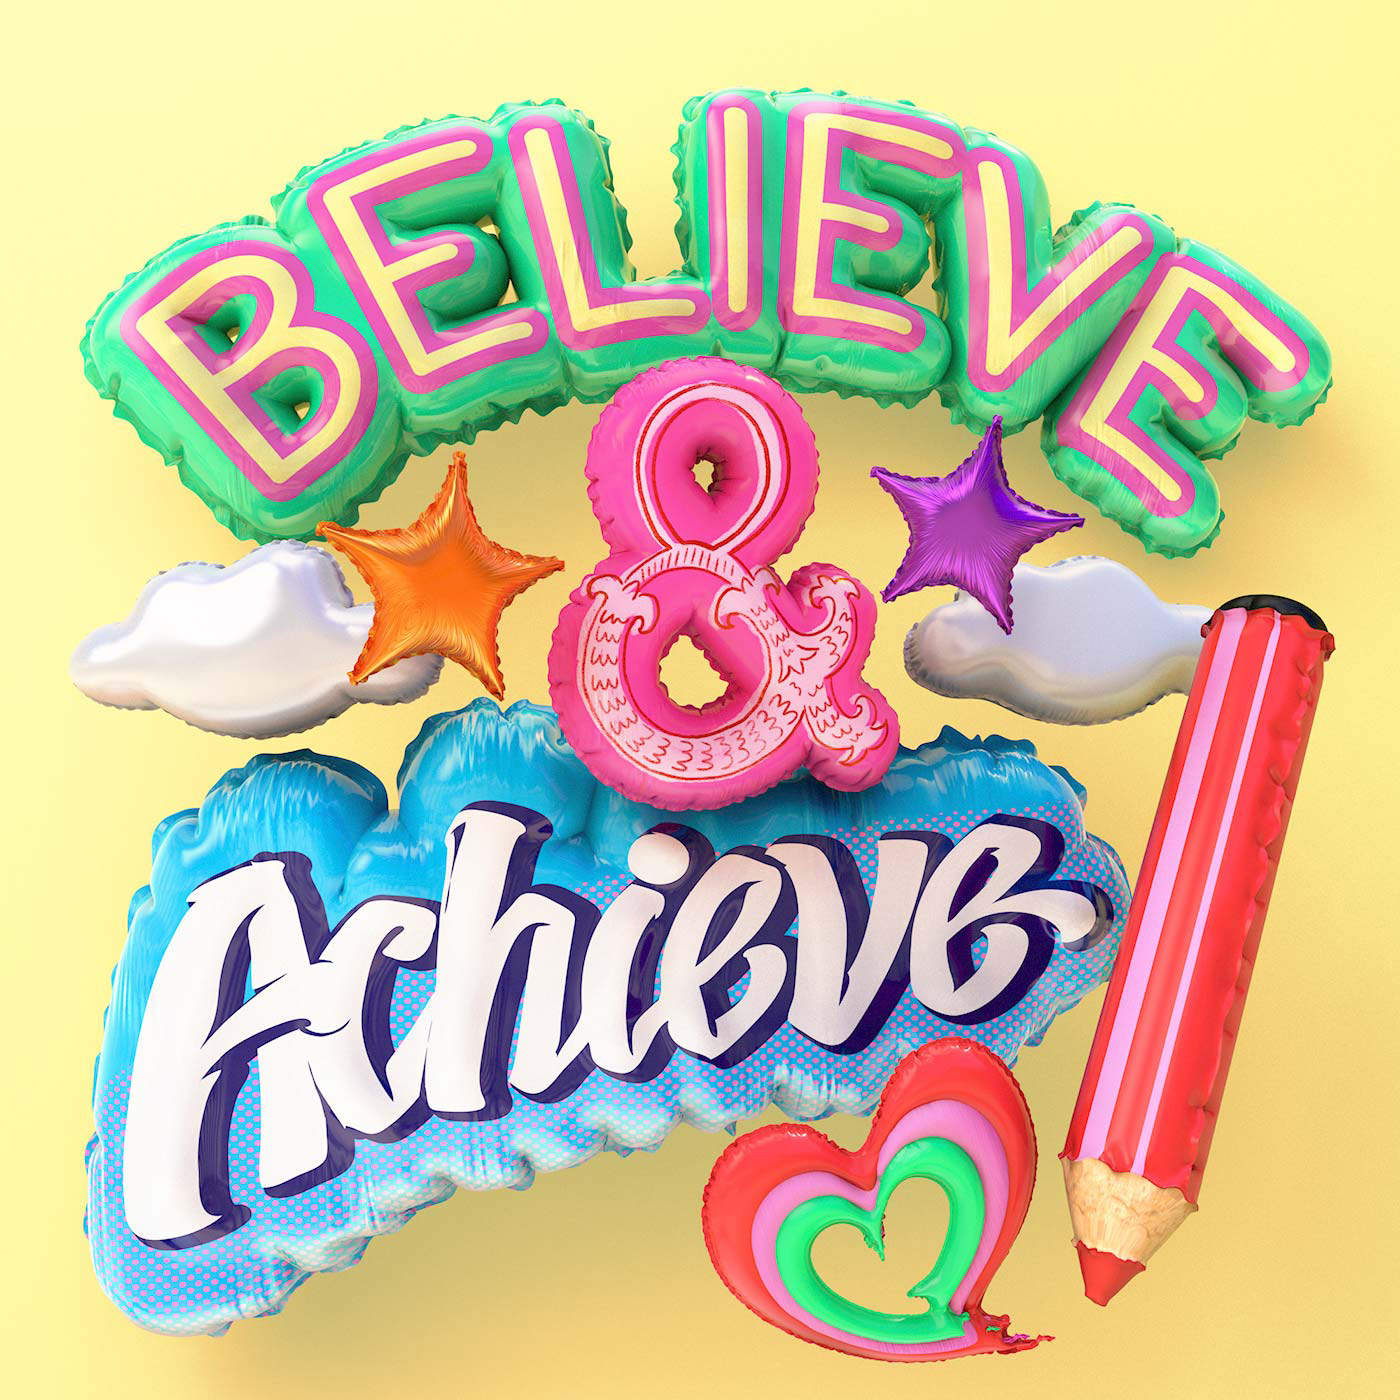 27.believe-achieve.jpg